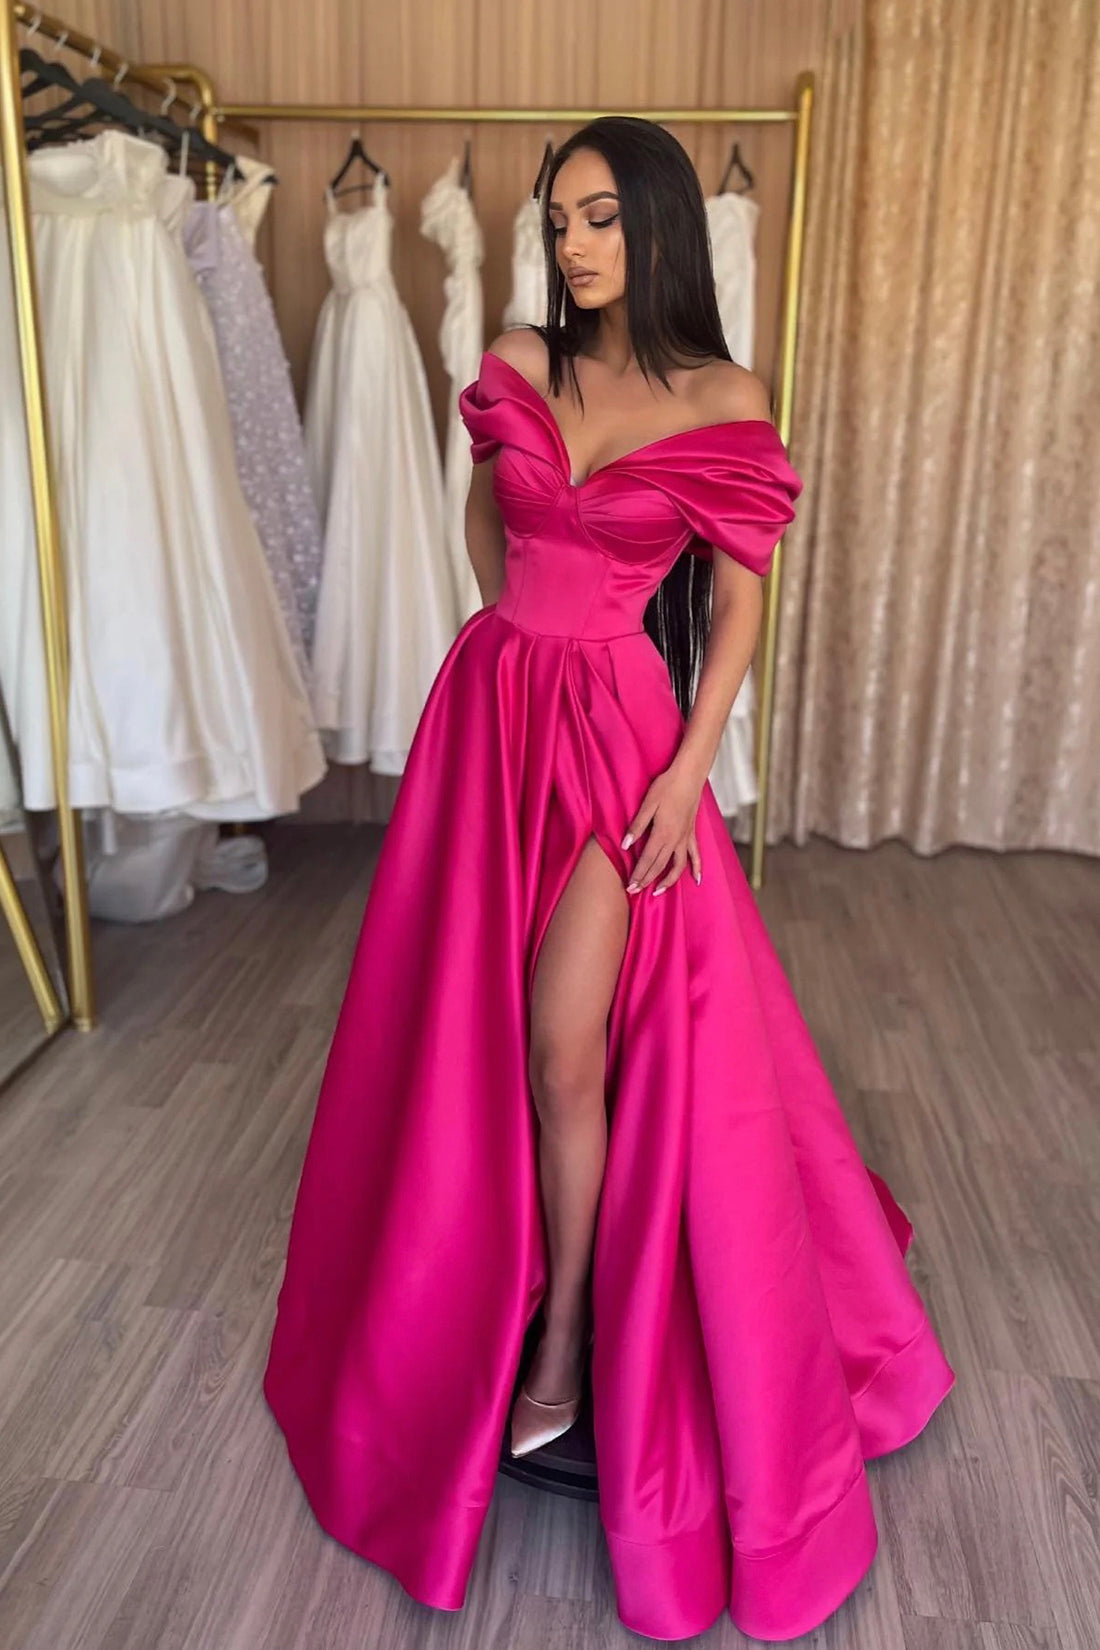 Mermaid Spaghetti Strap Satin Long Prom Dress, Hot Pink Corset Evening